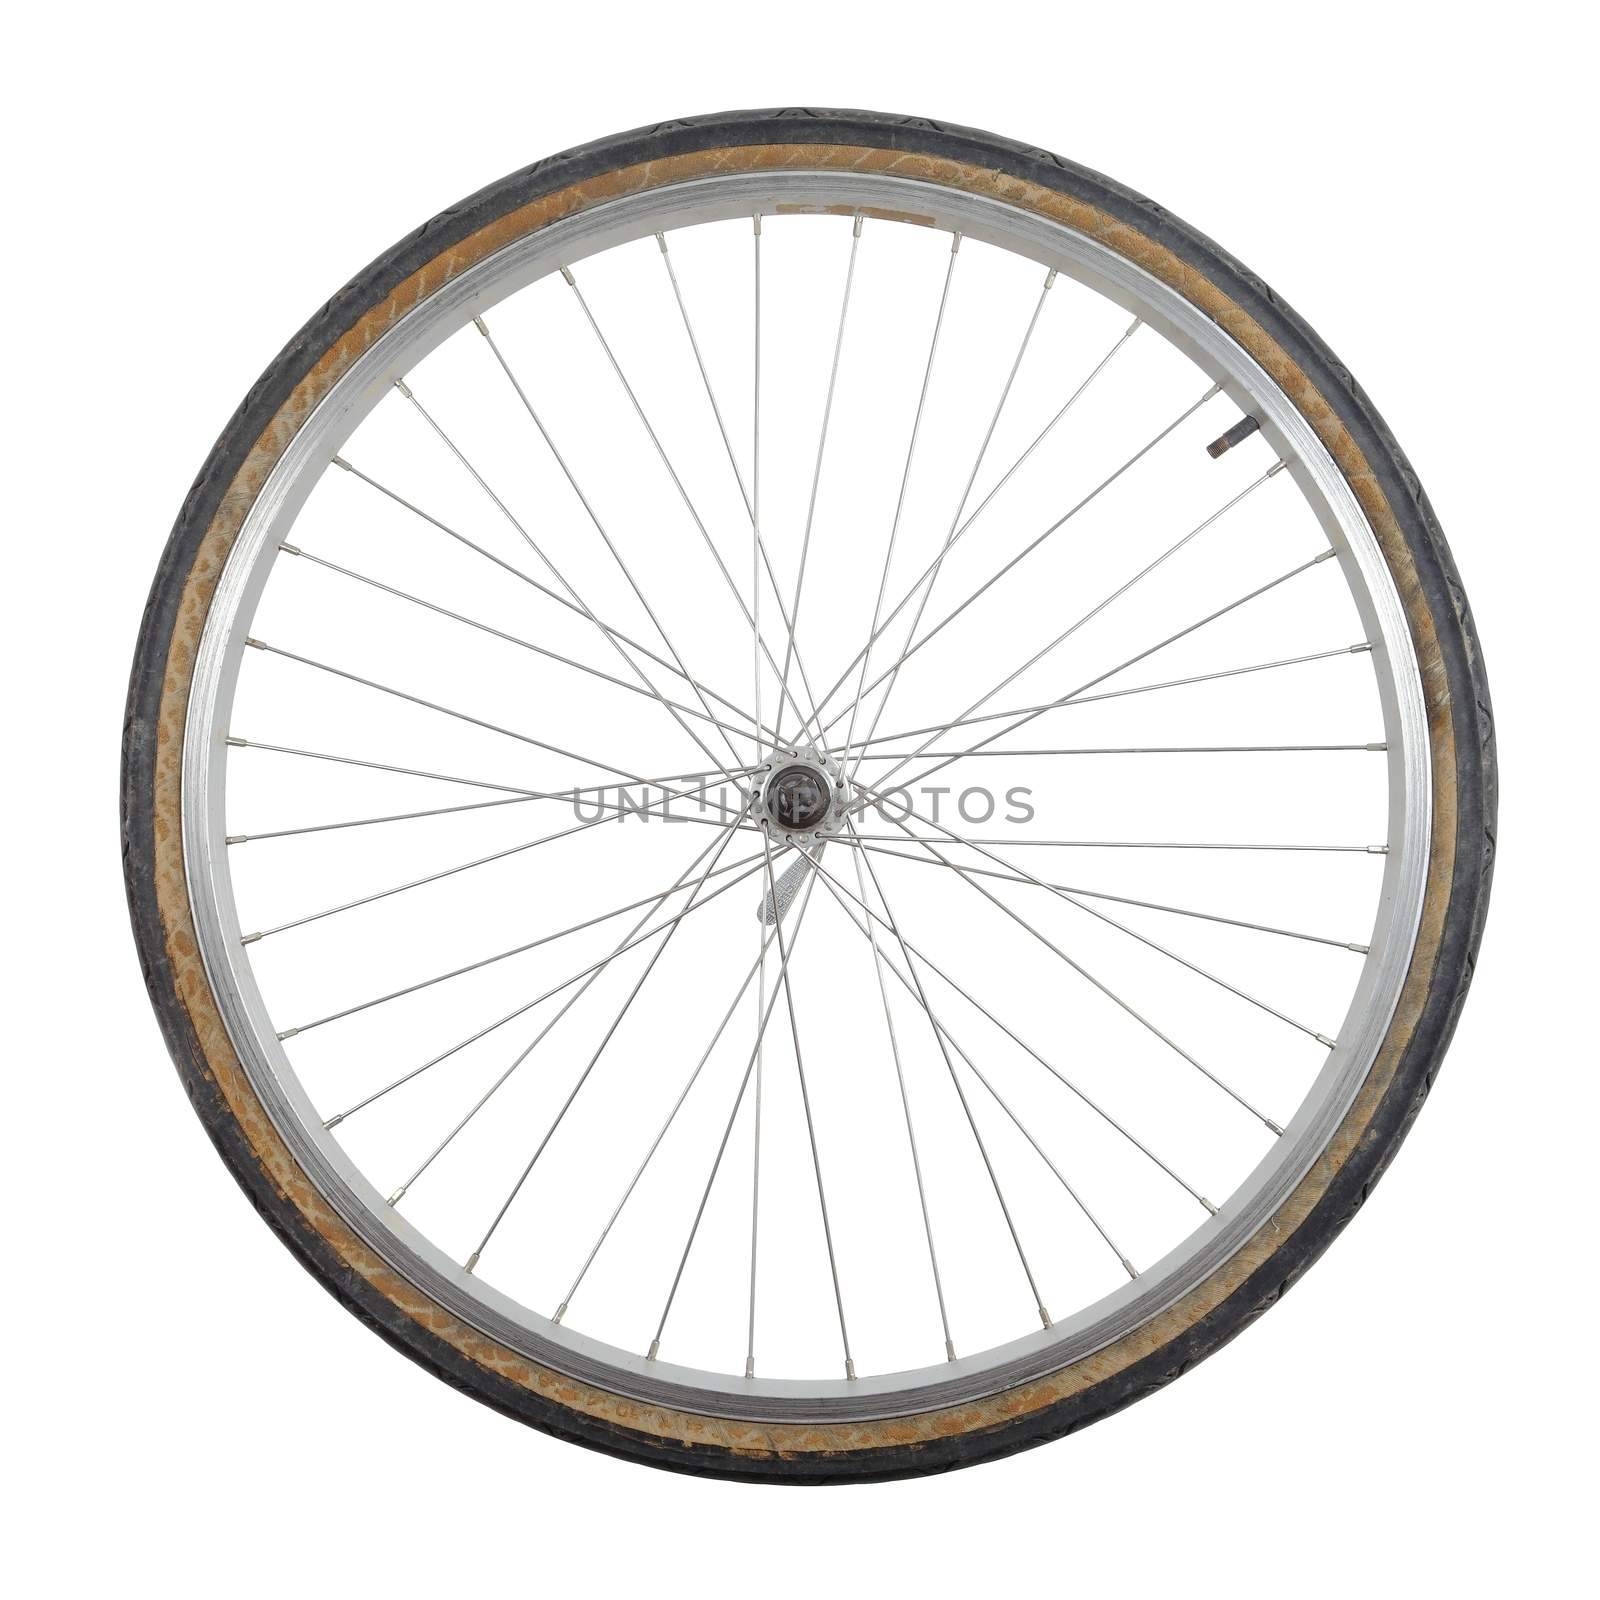 Bicycle wheel isolated on white background